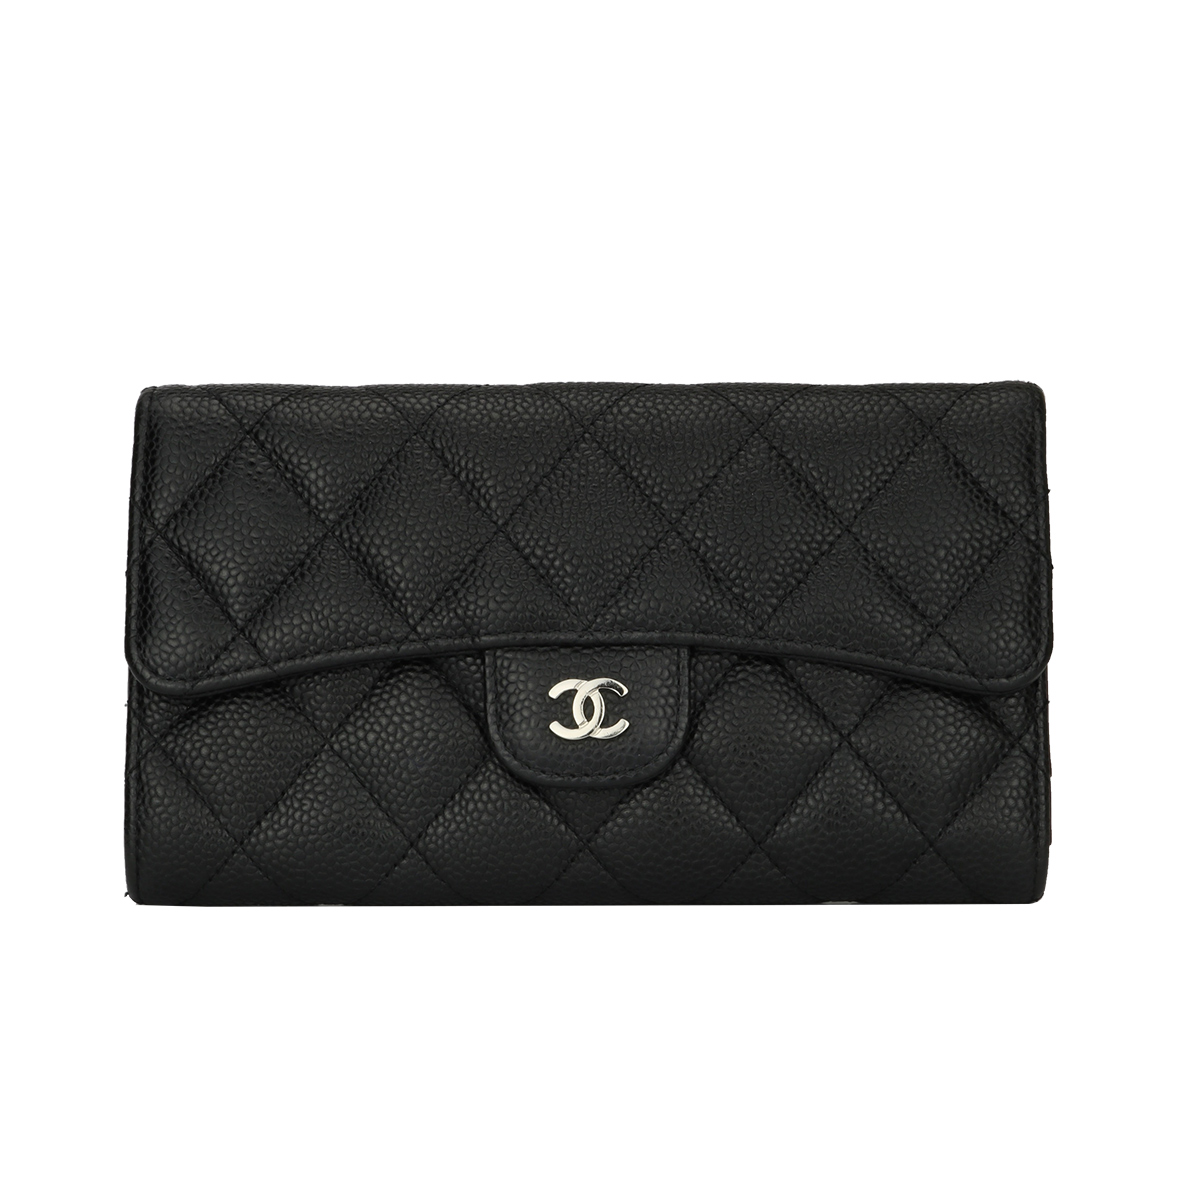 Chanel Medium Flap Wallet - 2016 Review 